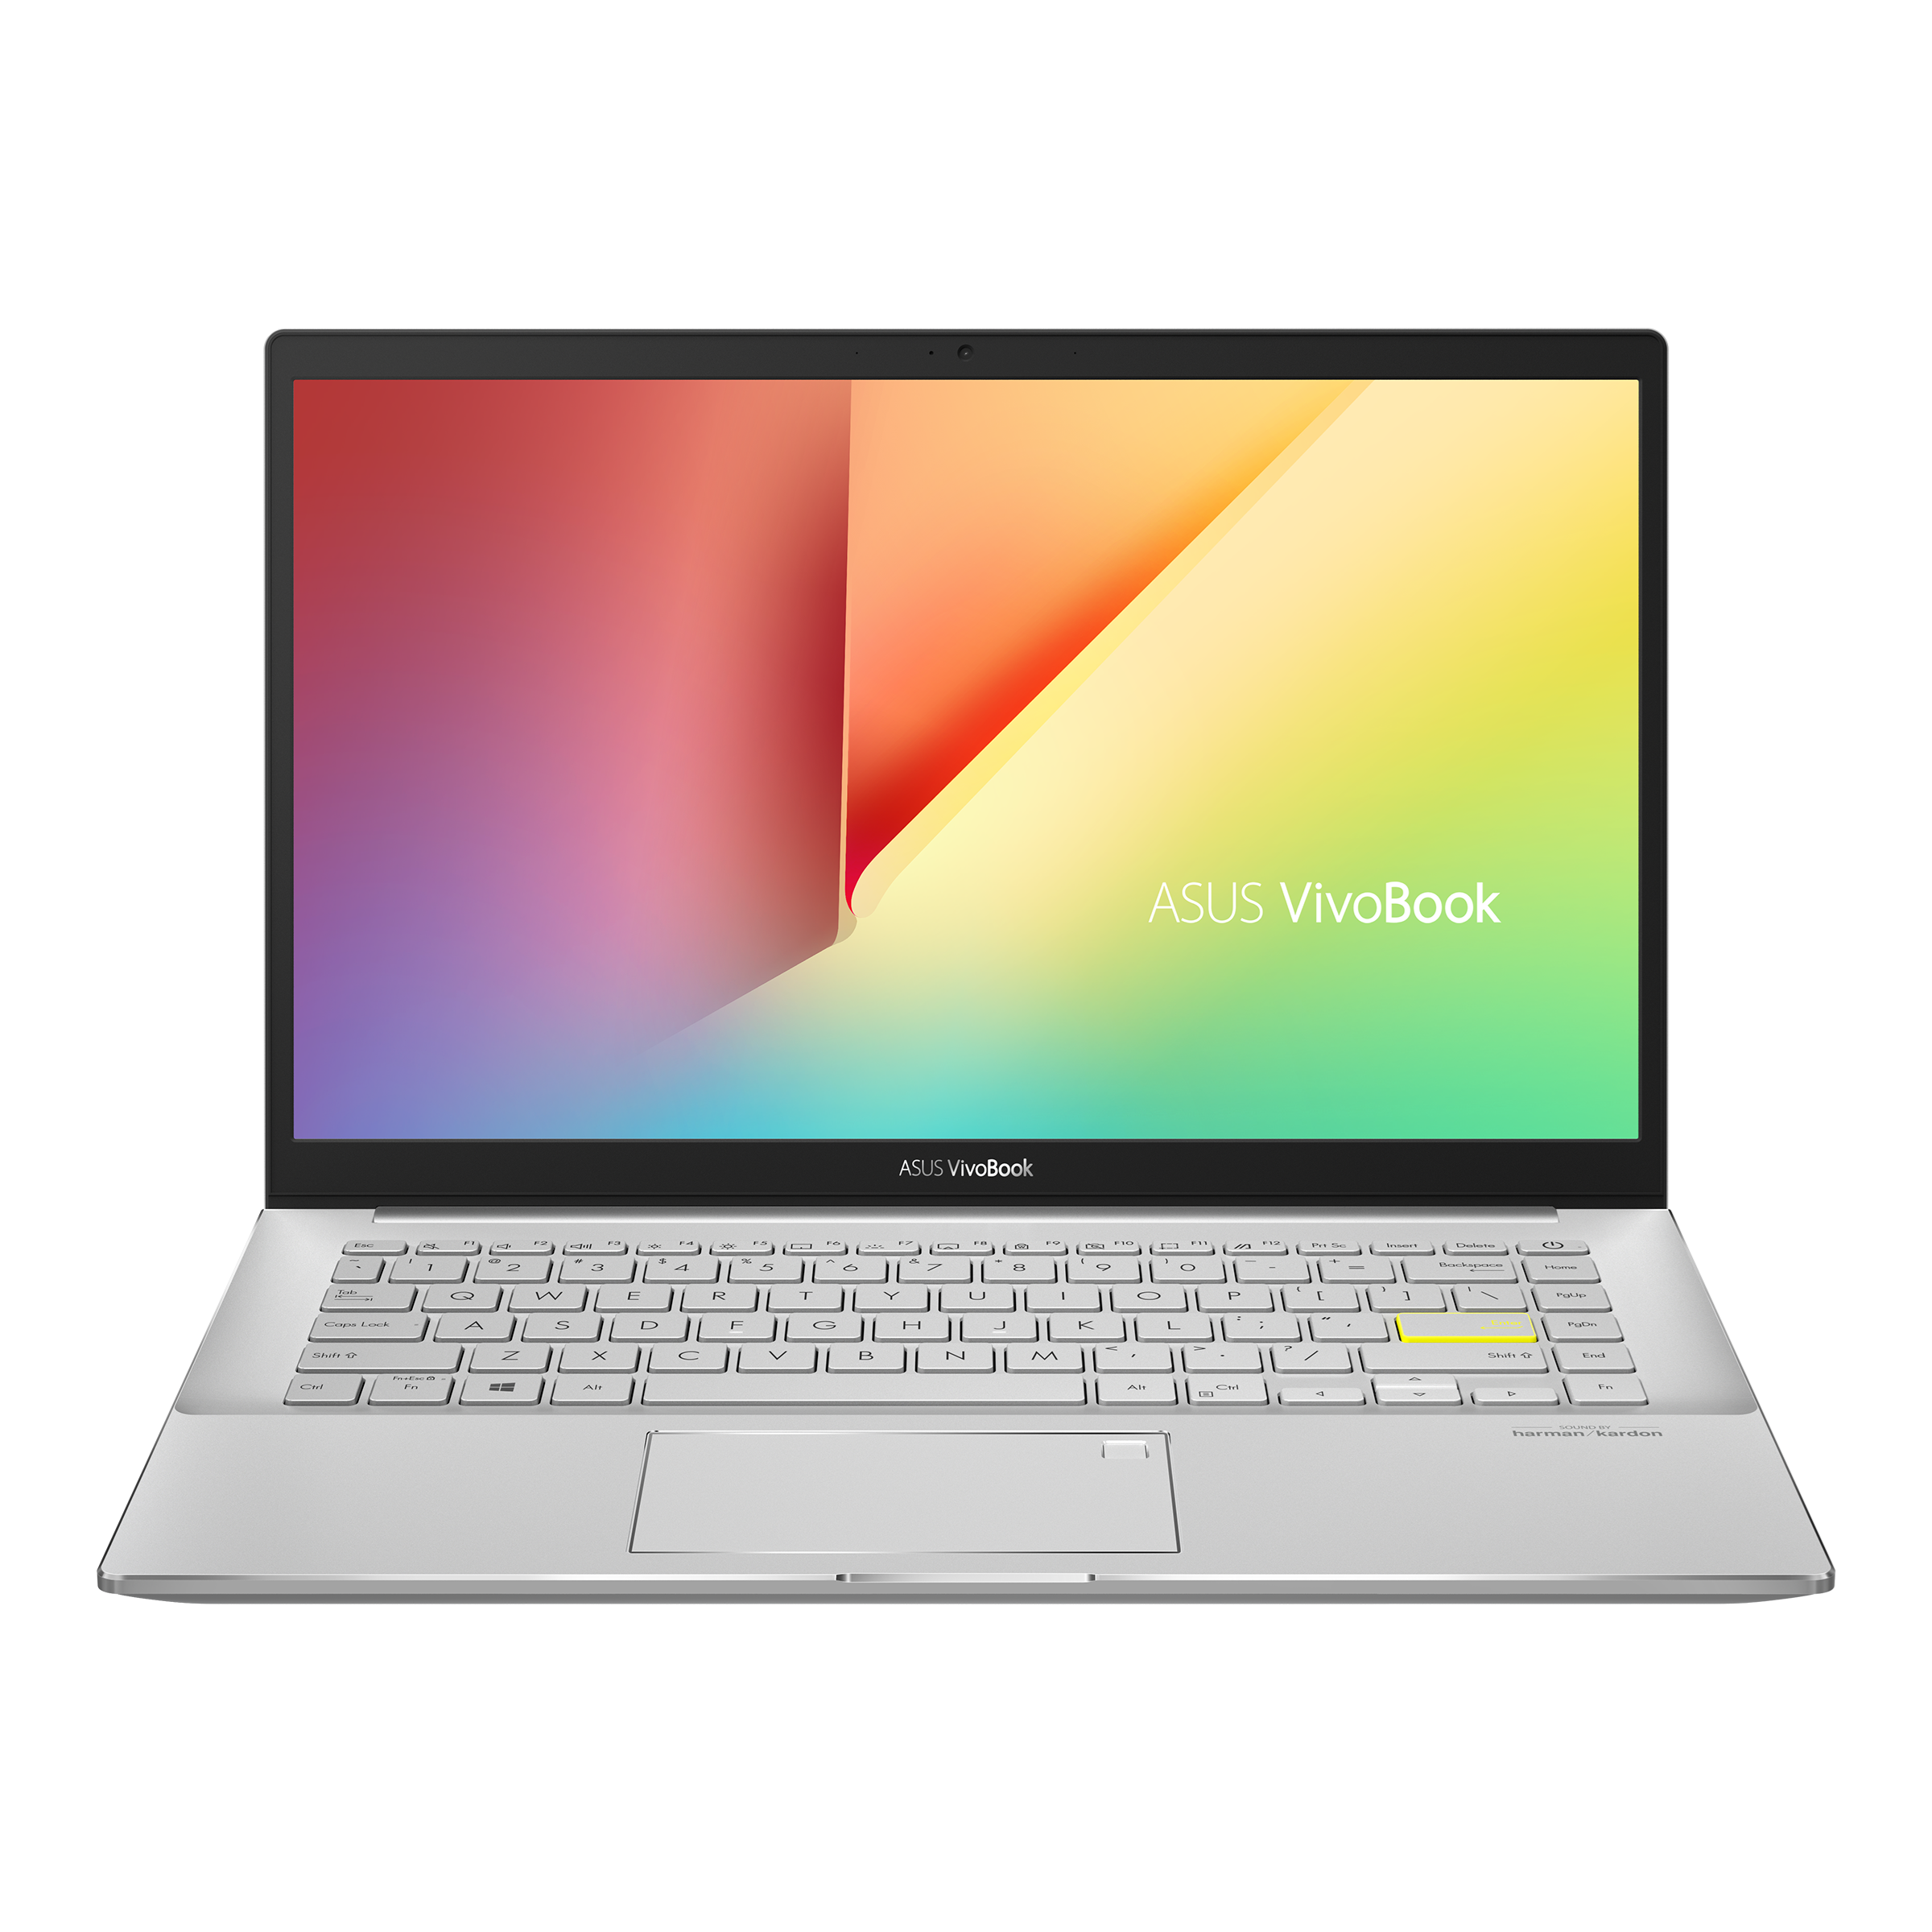 Mm Vies koelkast ASUS Vivobook Laptops｜Laptops For Home｜ASUS USA